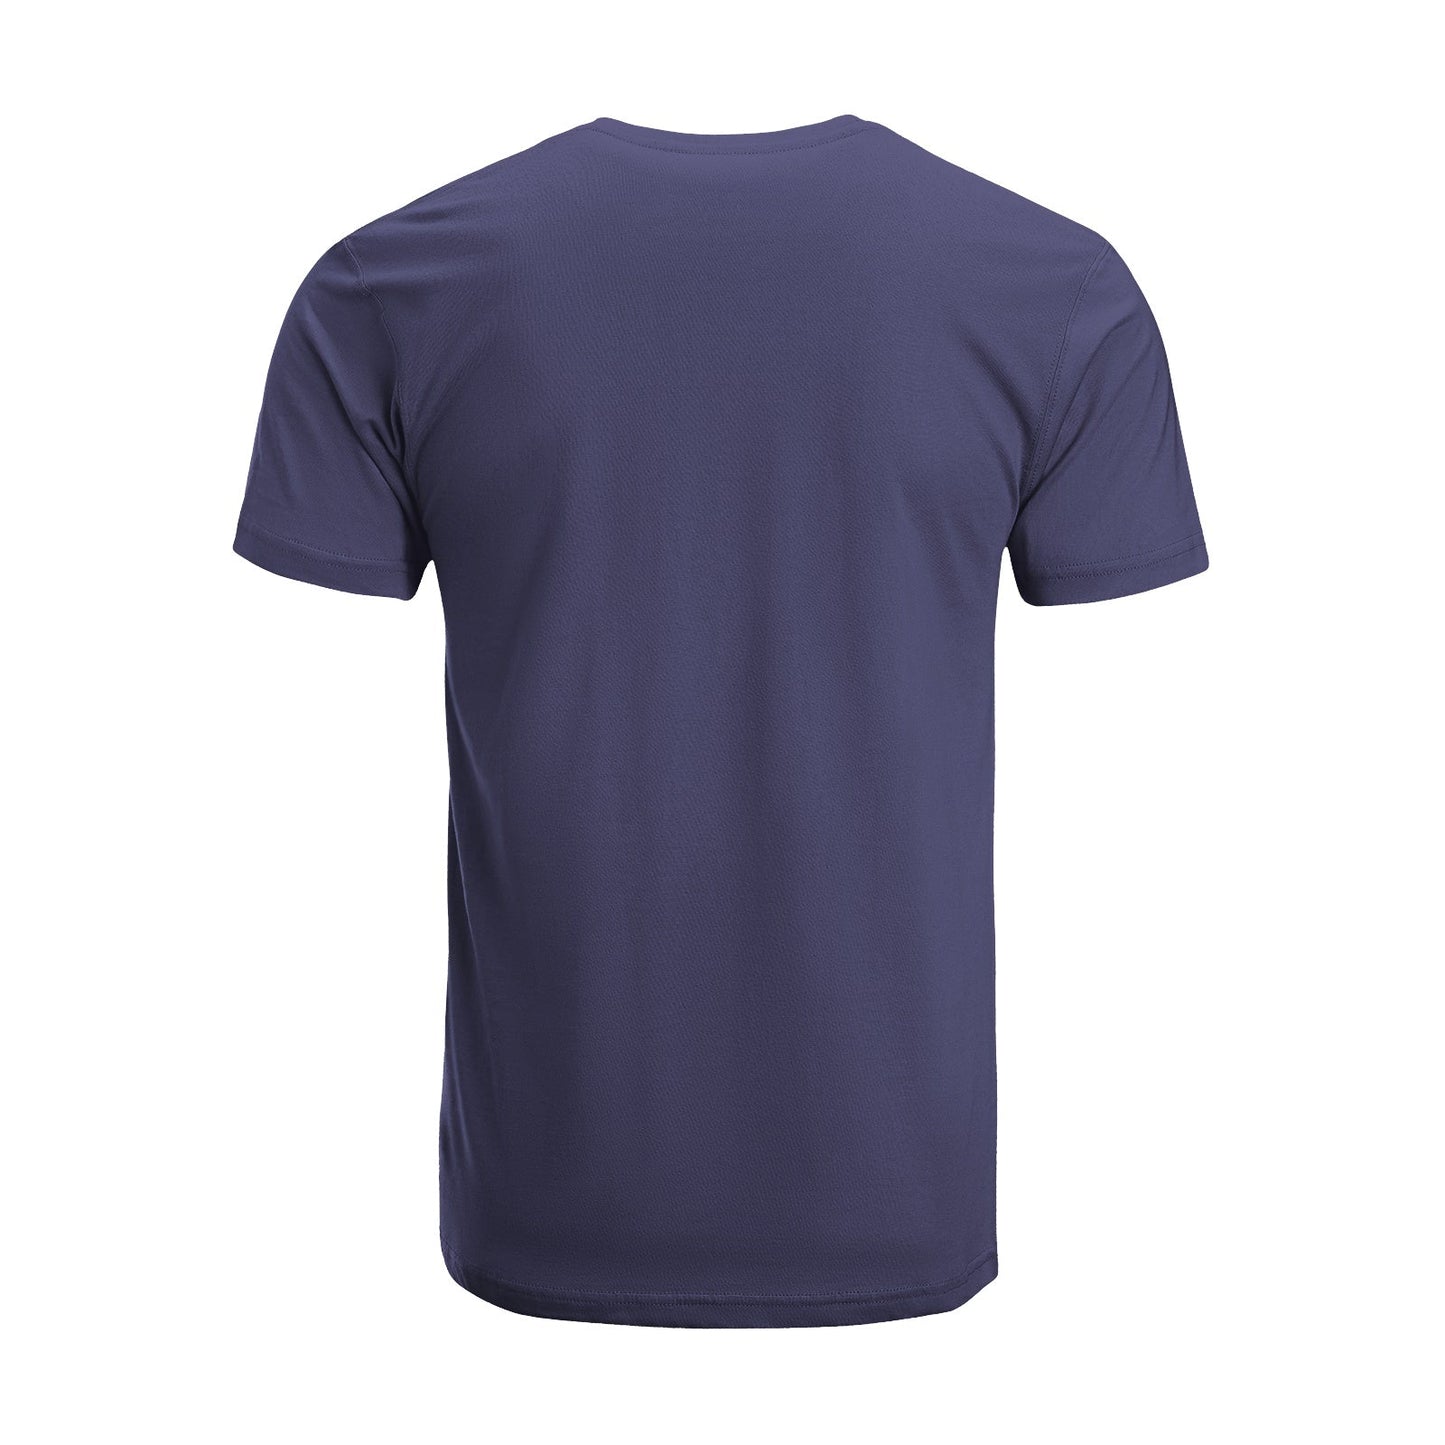 Unisex Short Sleeve Crew Neck Cotton Jersey T-Shirt MOM 23